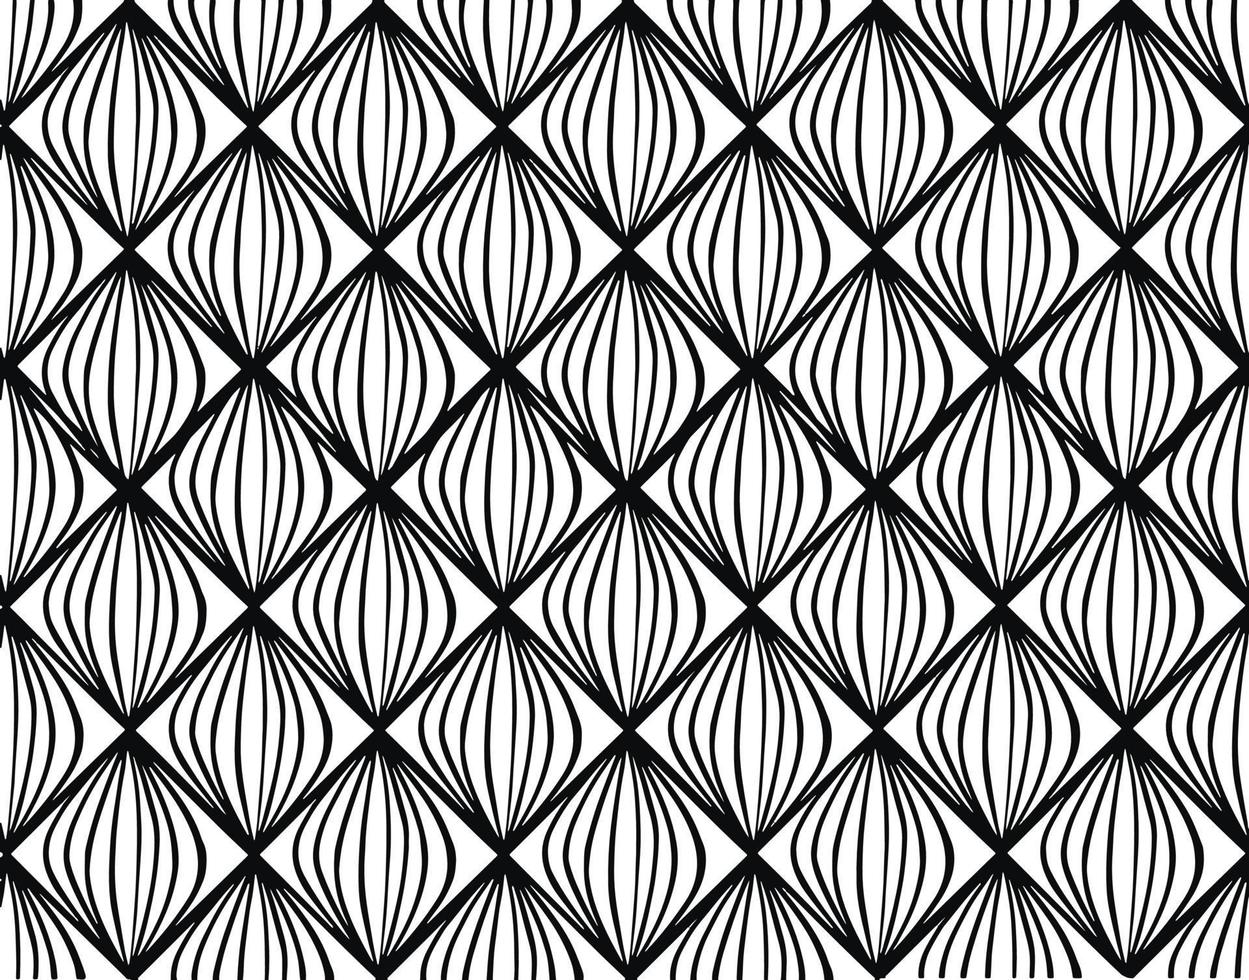 Black and white rhythmic seamless pattern. Vector illustration